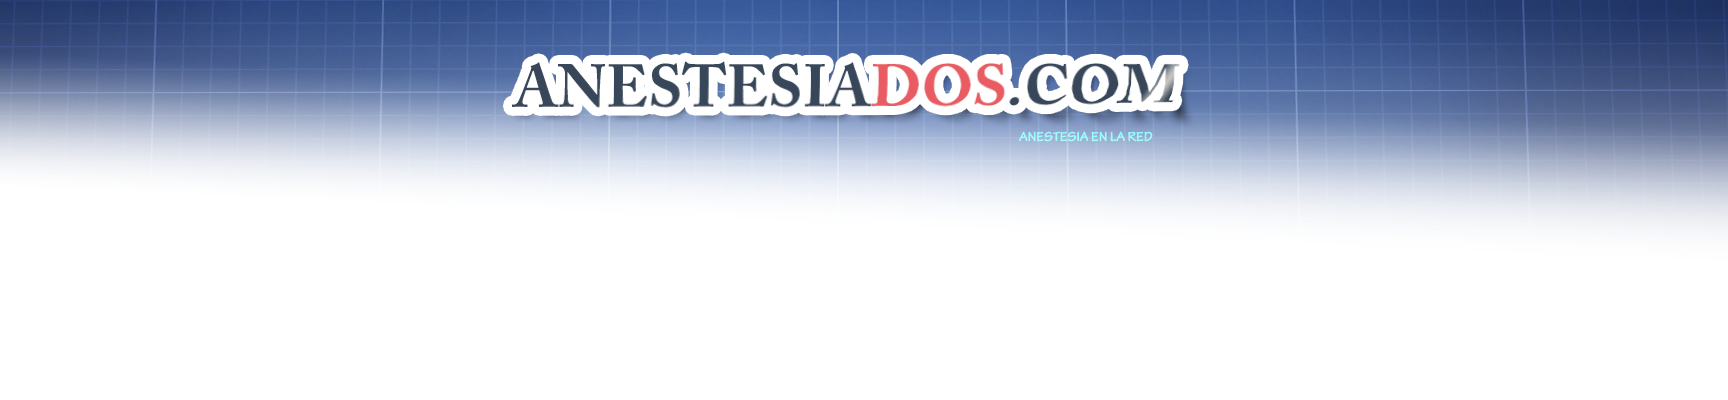 Anestesia2 